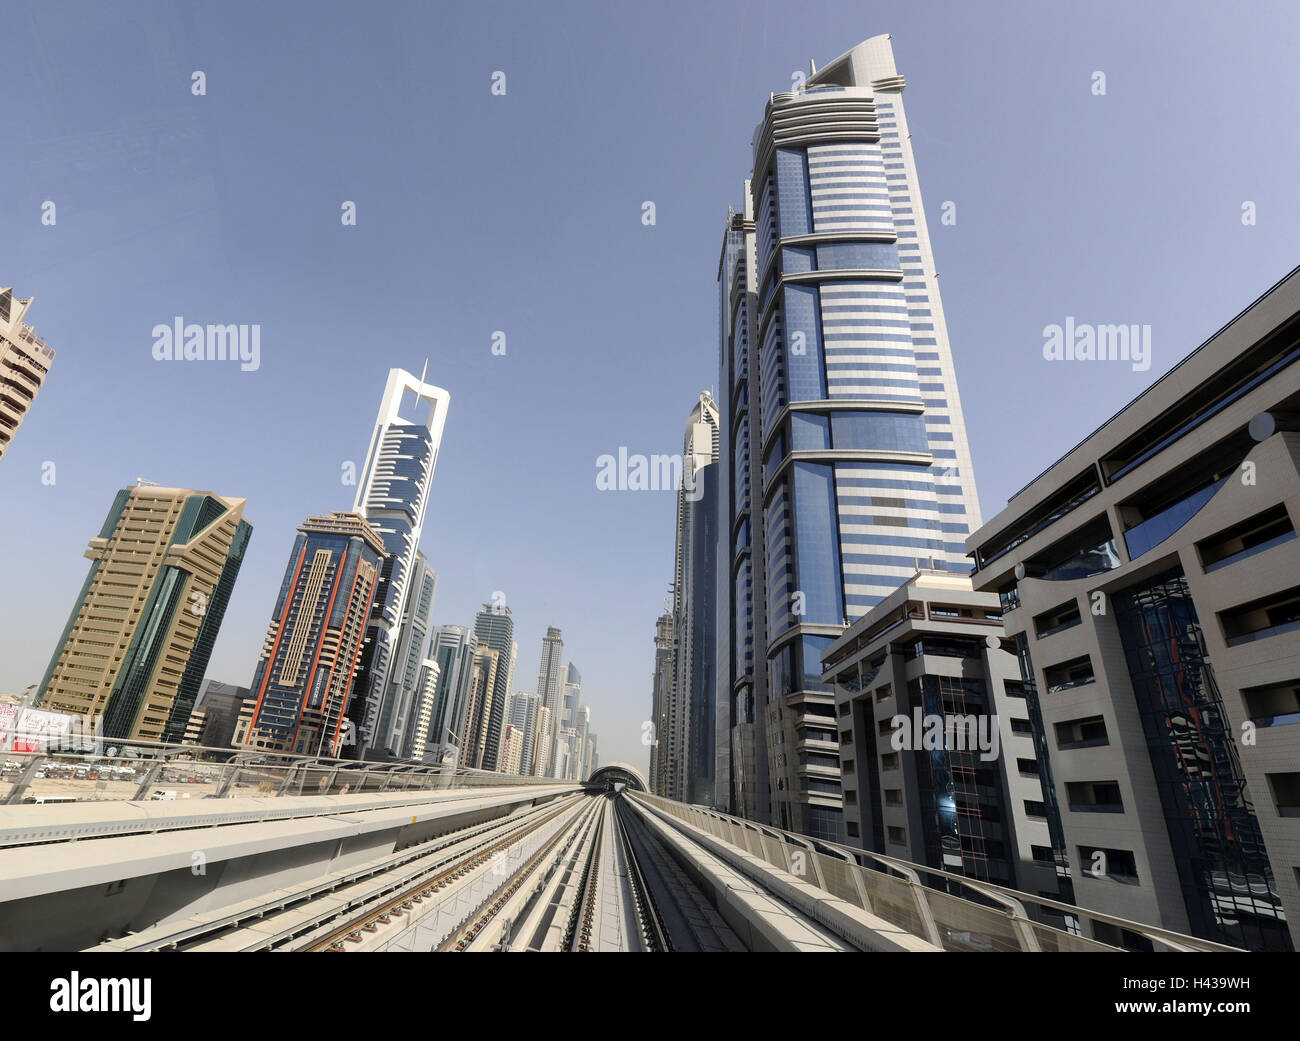 Trajectory, railway system, skyscraper, Dubai, United Arab Emirates, Stock Photo